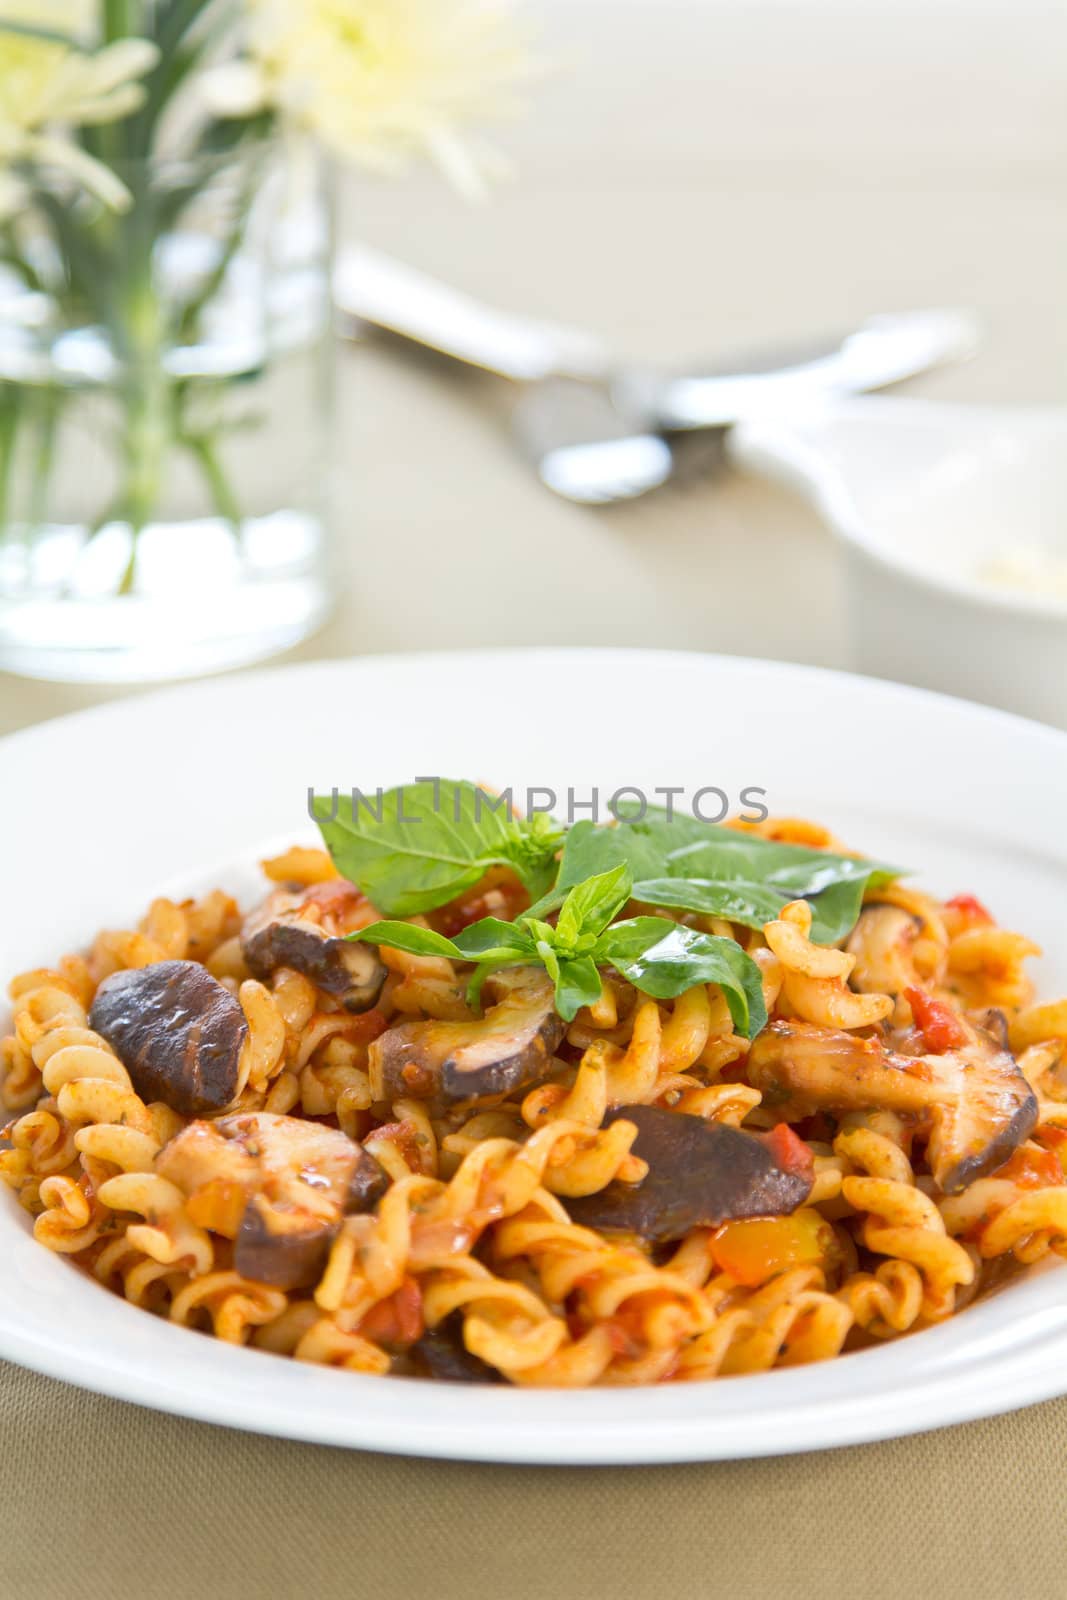 Fusili with mushroom in tomato sauce